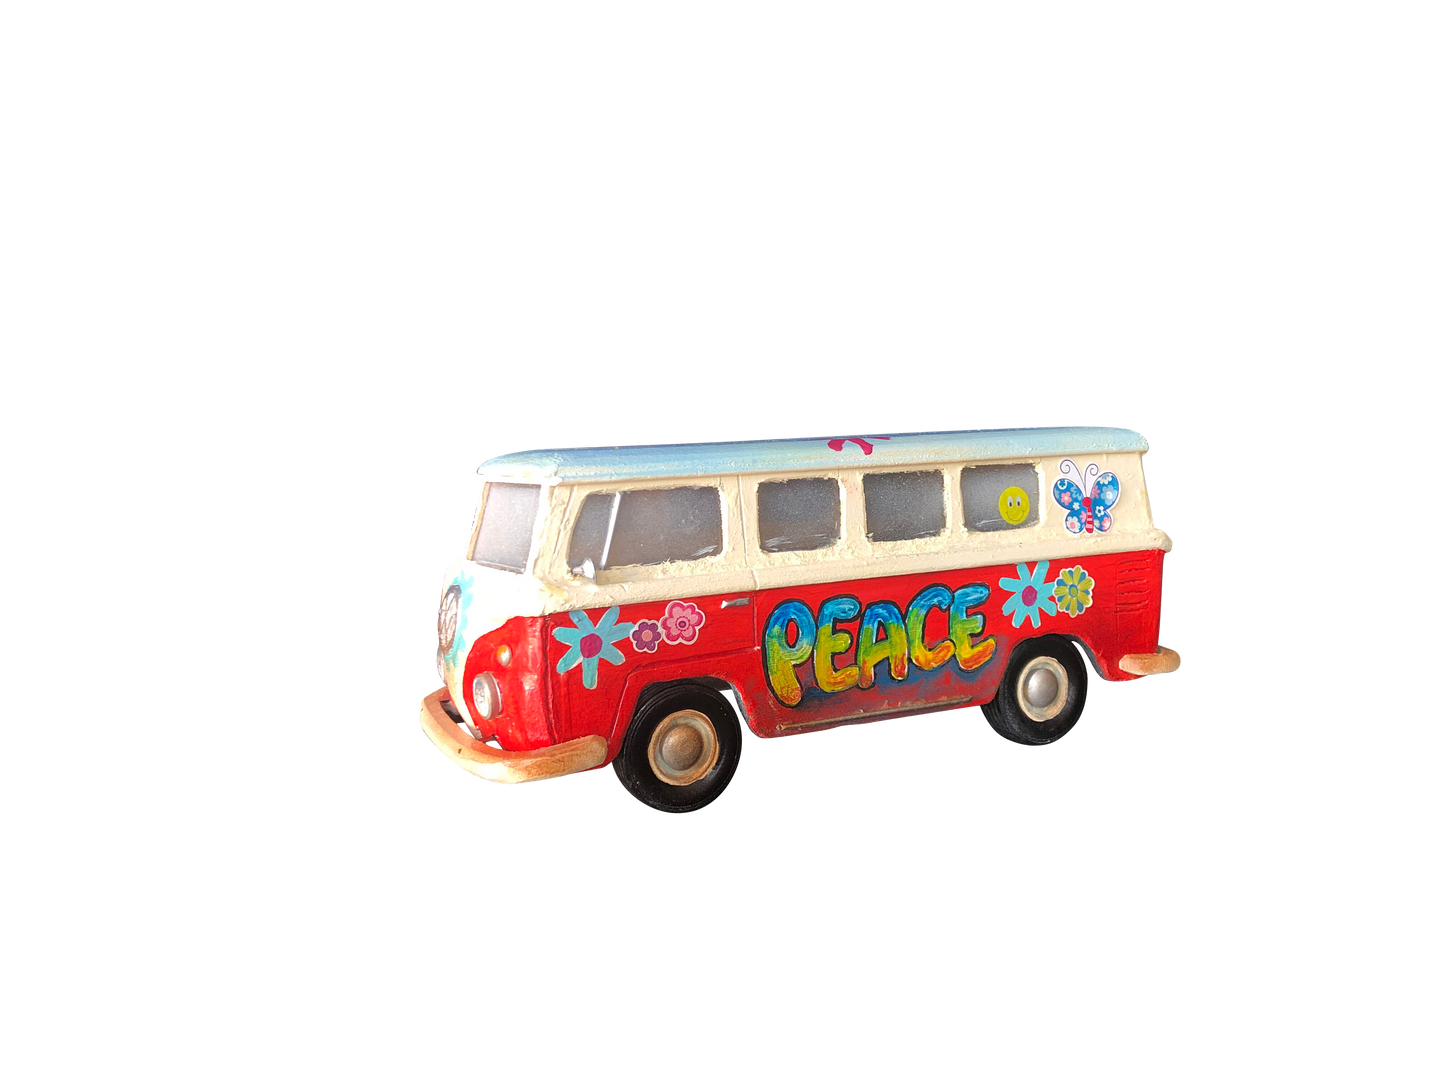 VW Hippie Van - One of a Kind